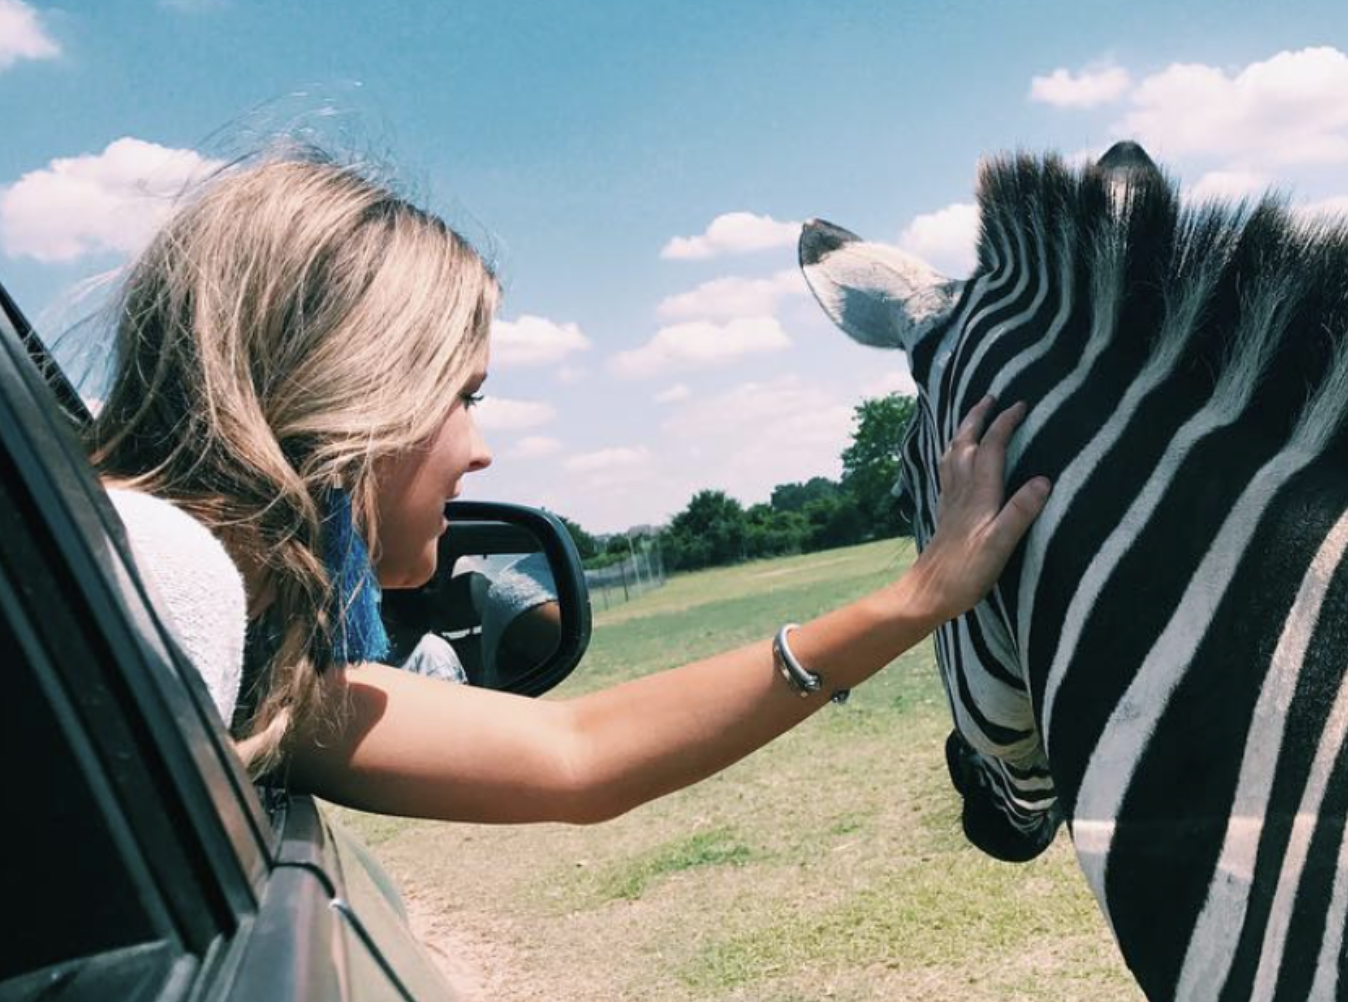 Girl in car petting zebra through open window